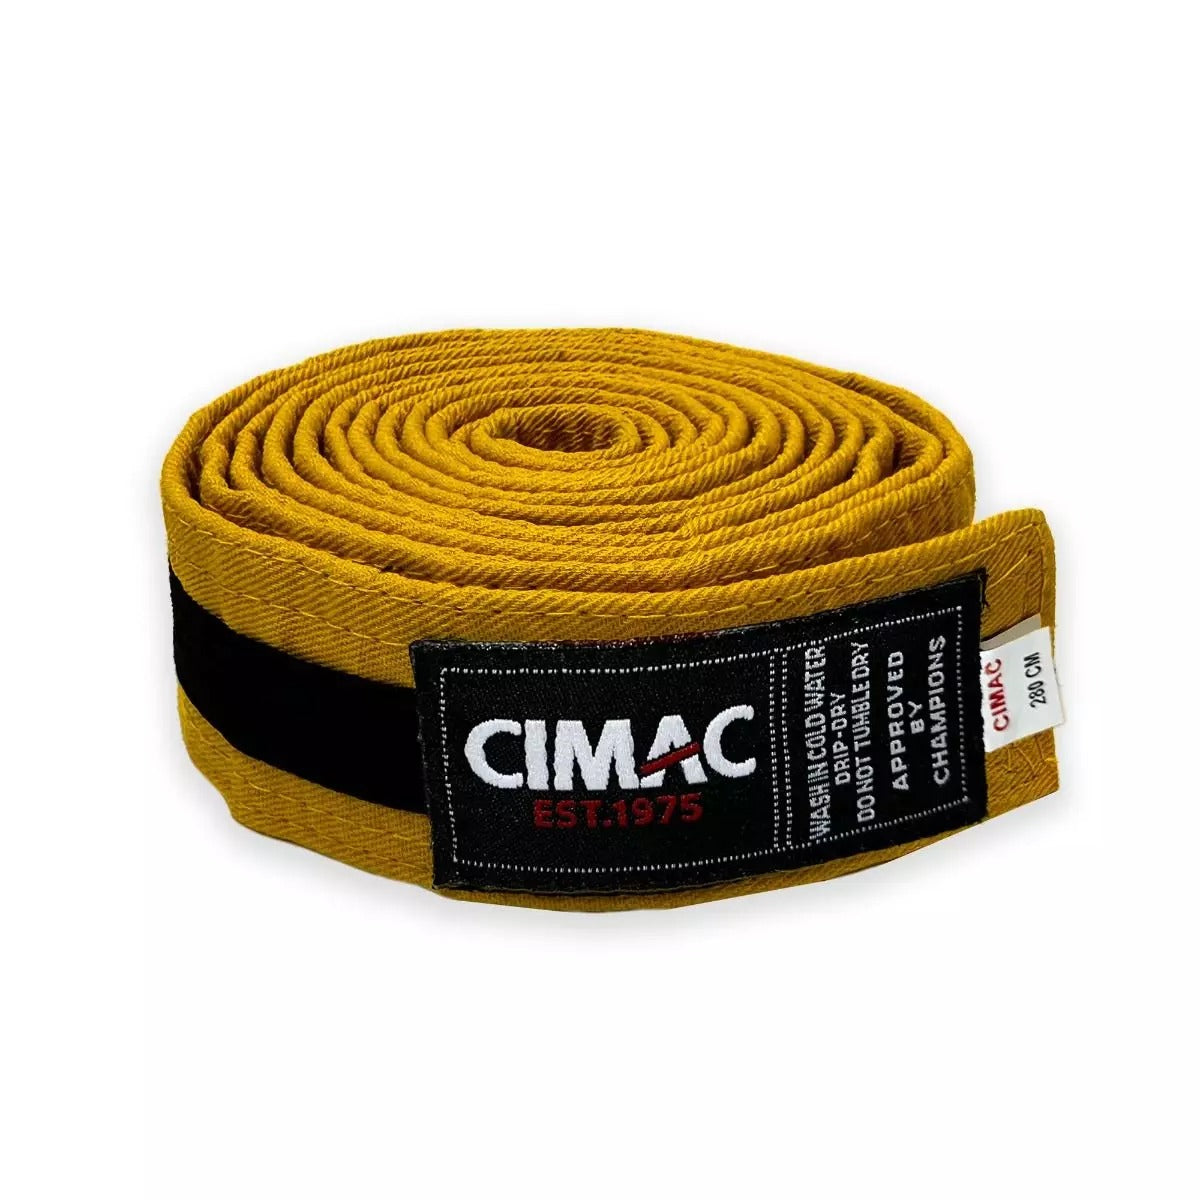 Cimac Colour Karate Belt With Black Strip Martial Arts